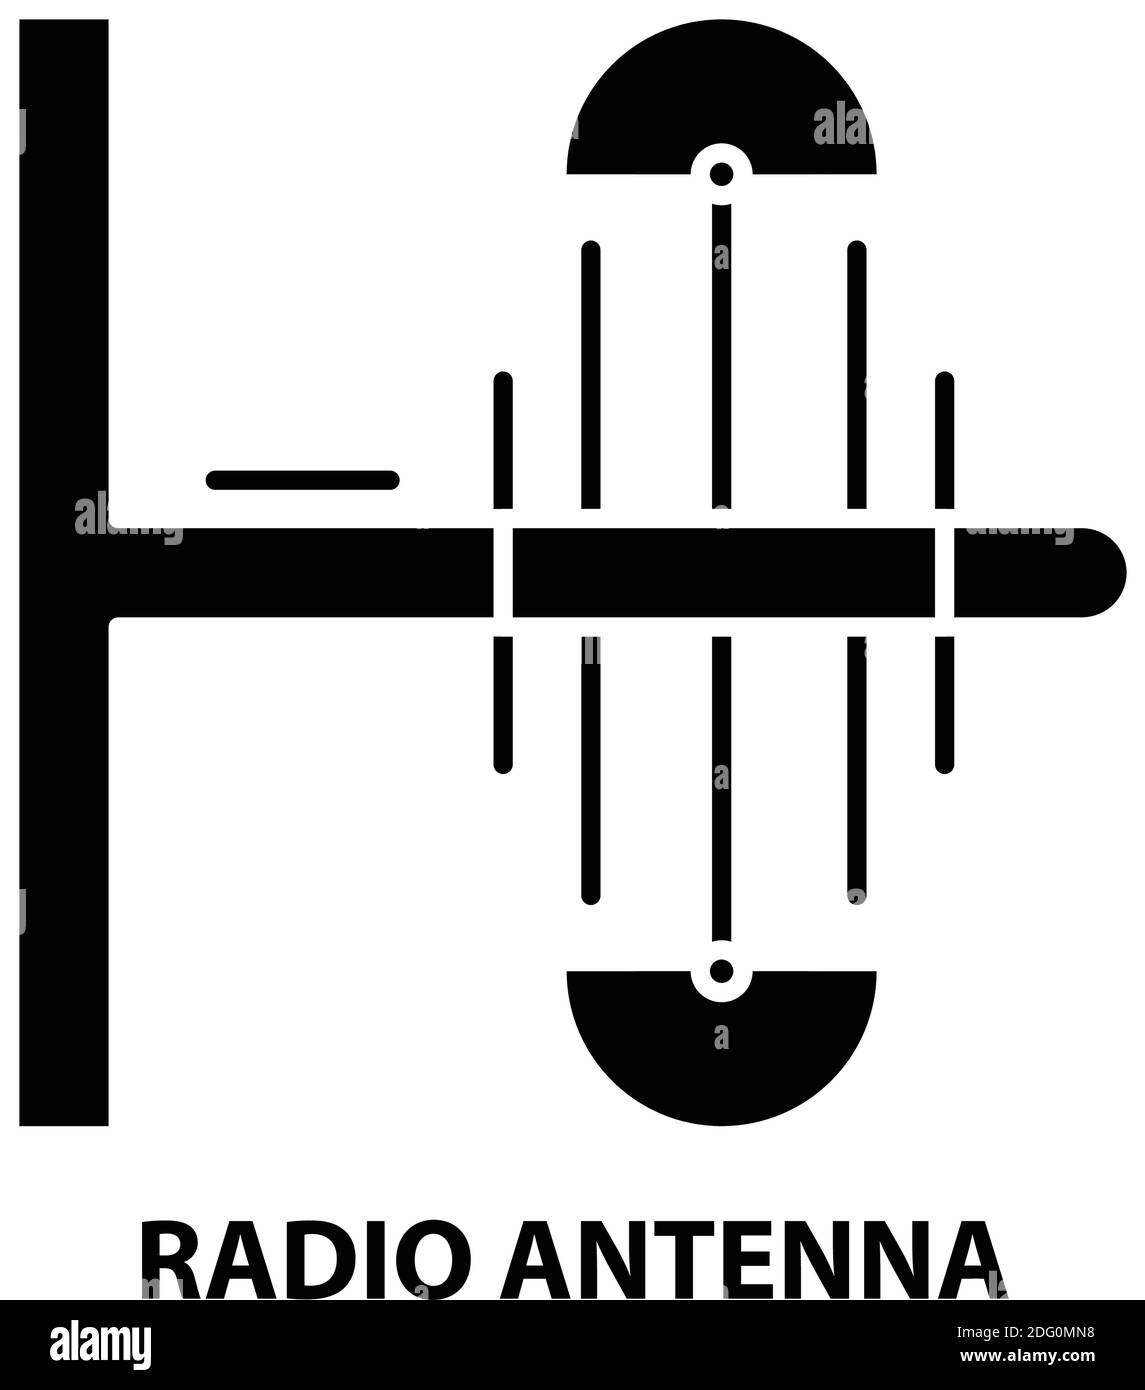 radio antenna icon, black vector sign with editable strokes, concept illustration Stock Vector